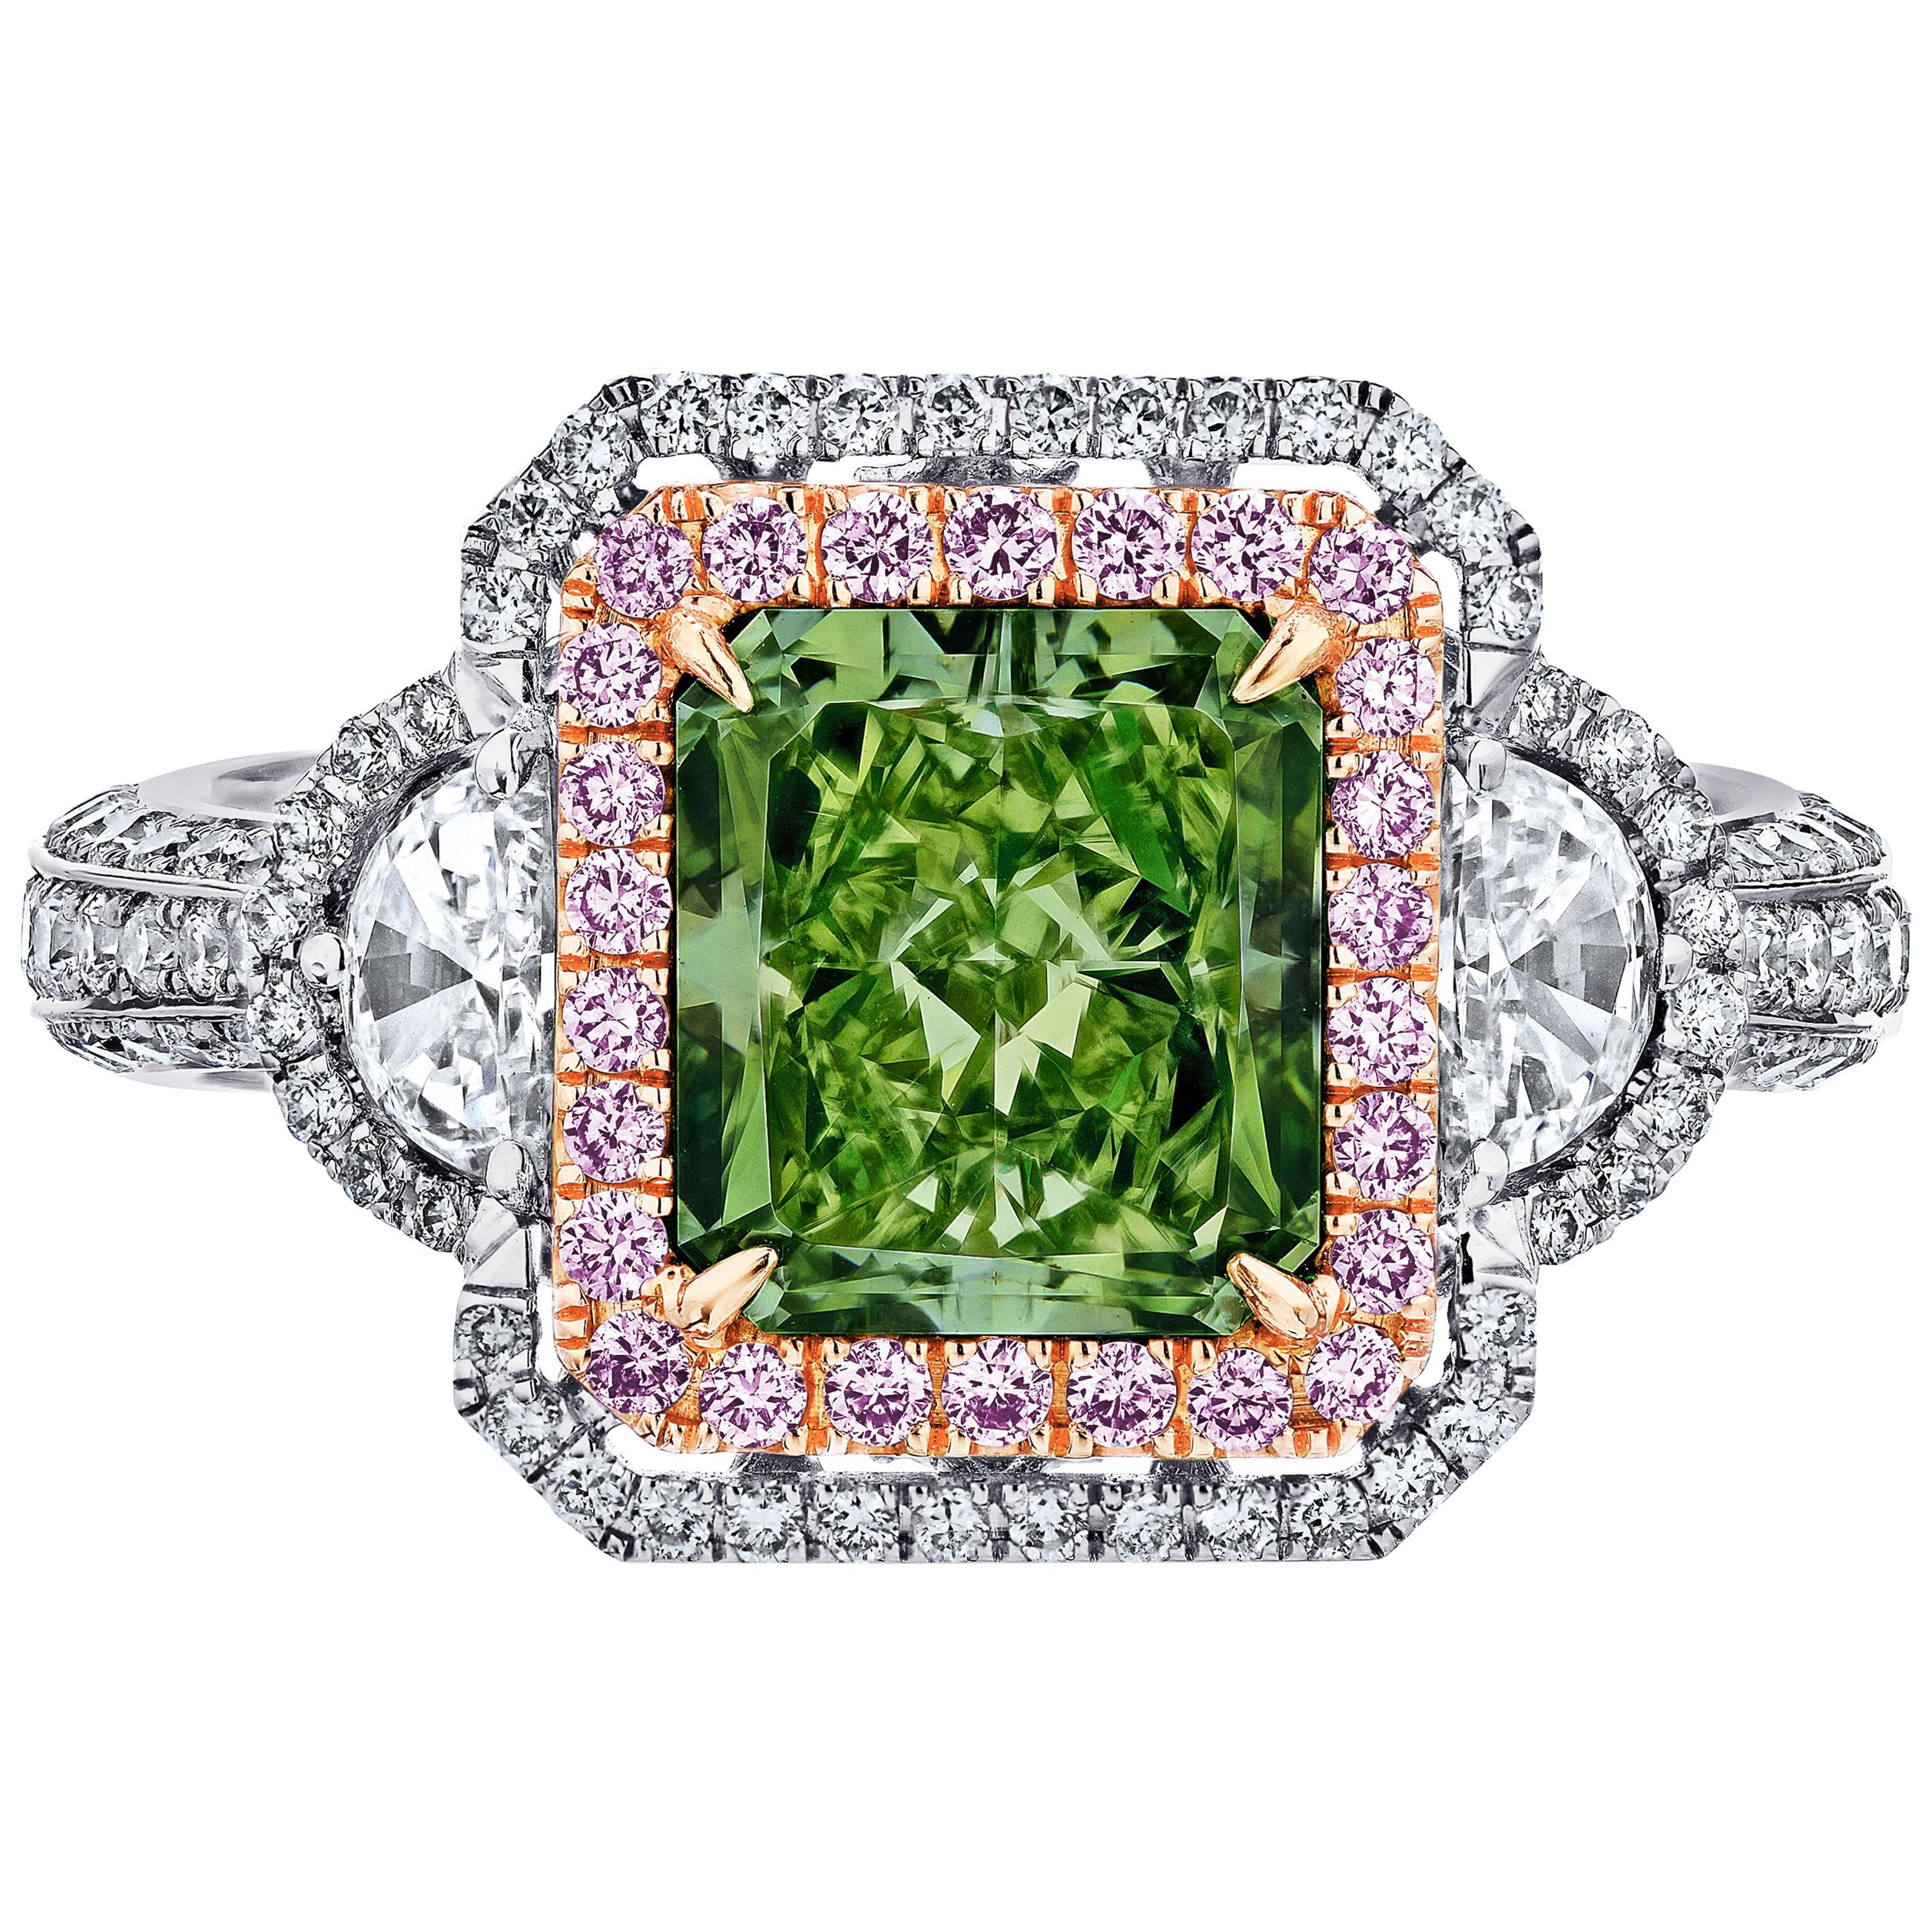 Emilio Jewelry GIA Certified 4.71 Carat Fancy Intense Green Diamond Ring